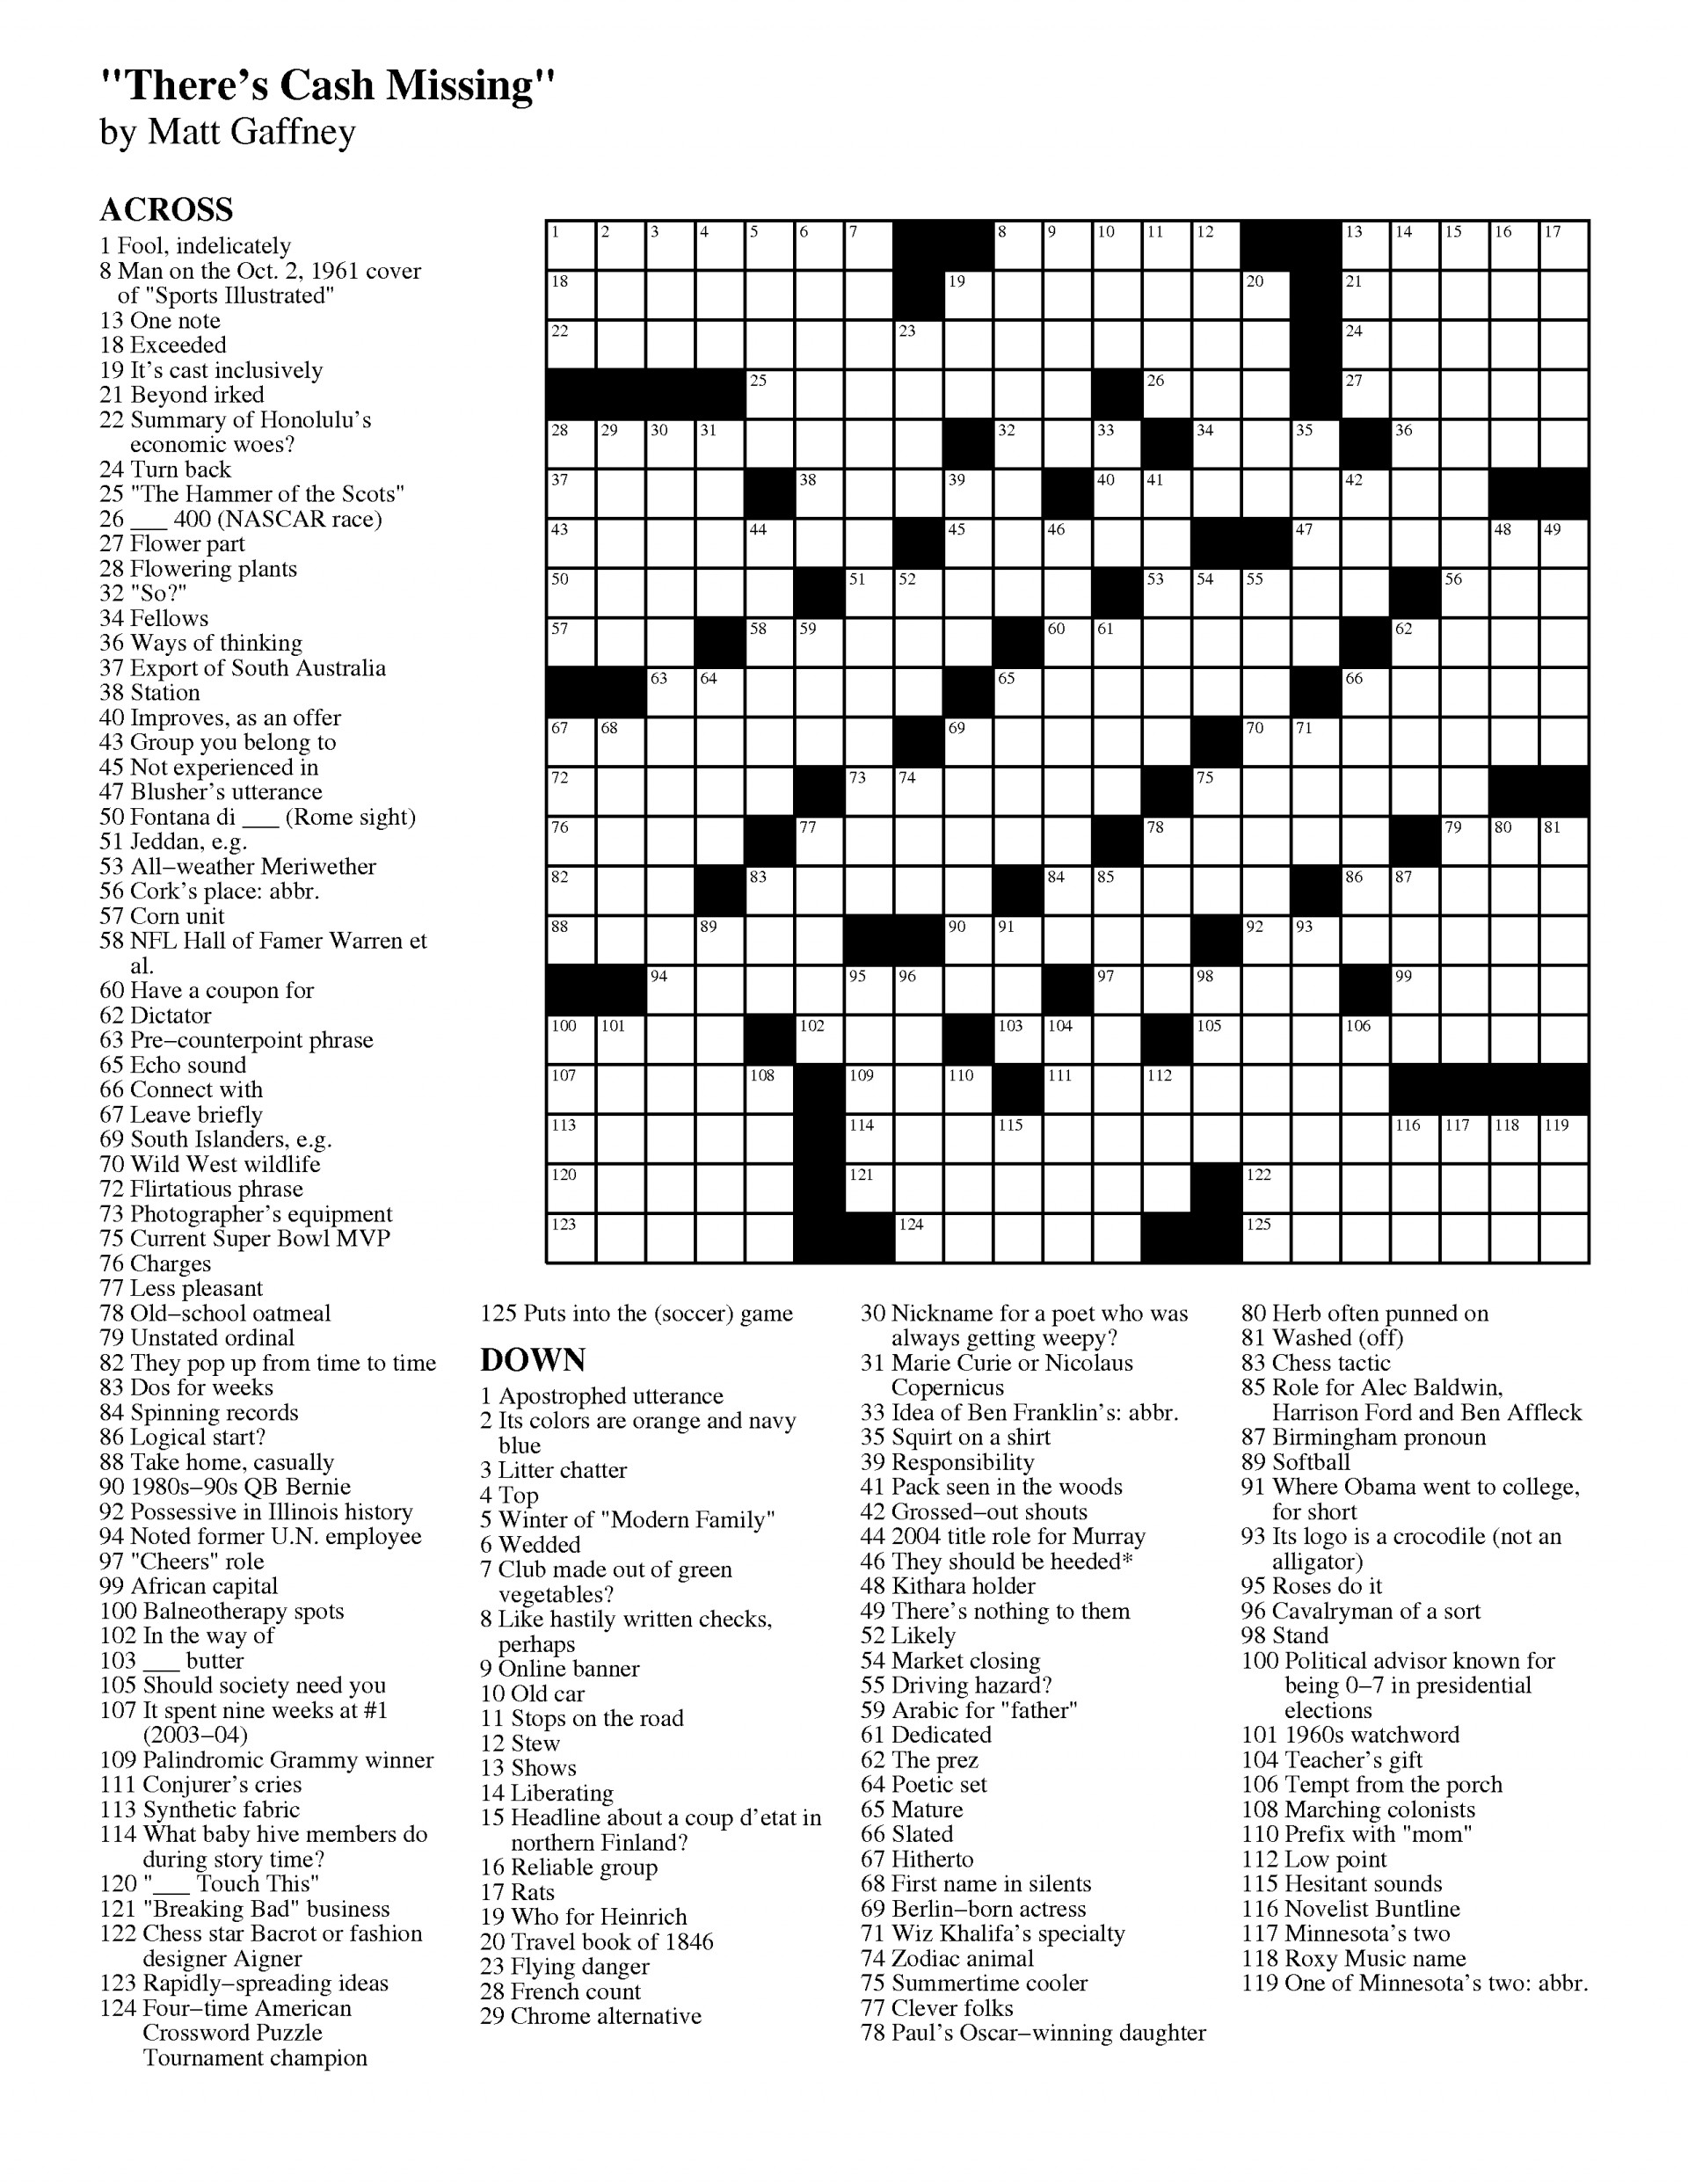 Merl Reagle's Sunday Crossword Free Printable Free Printable